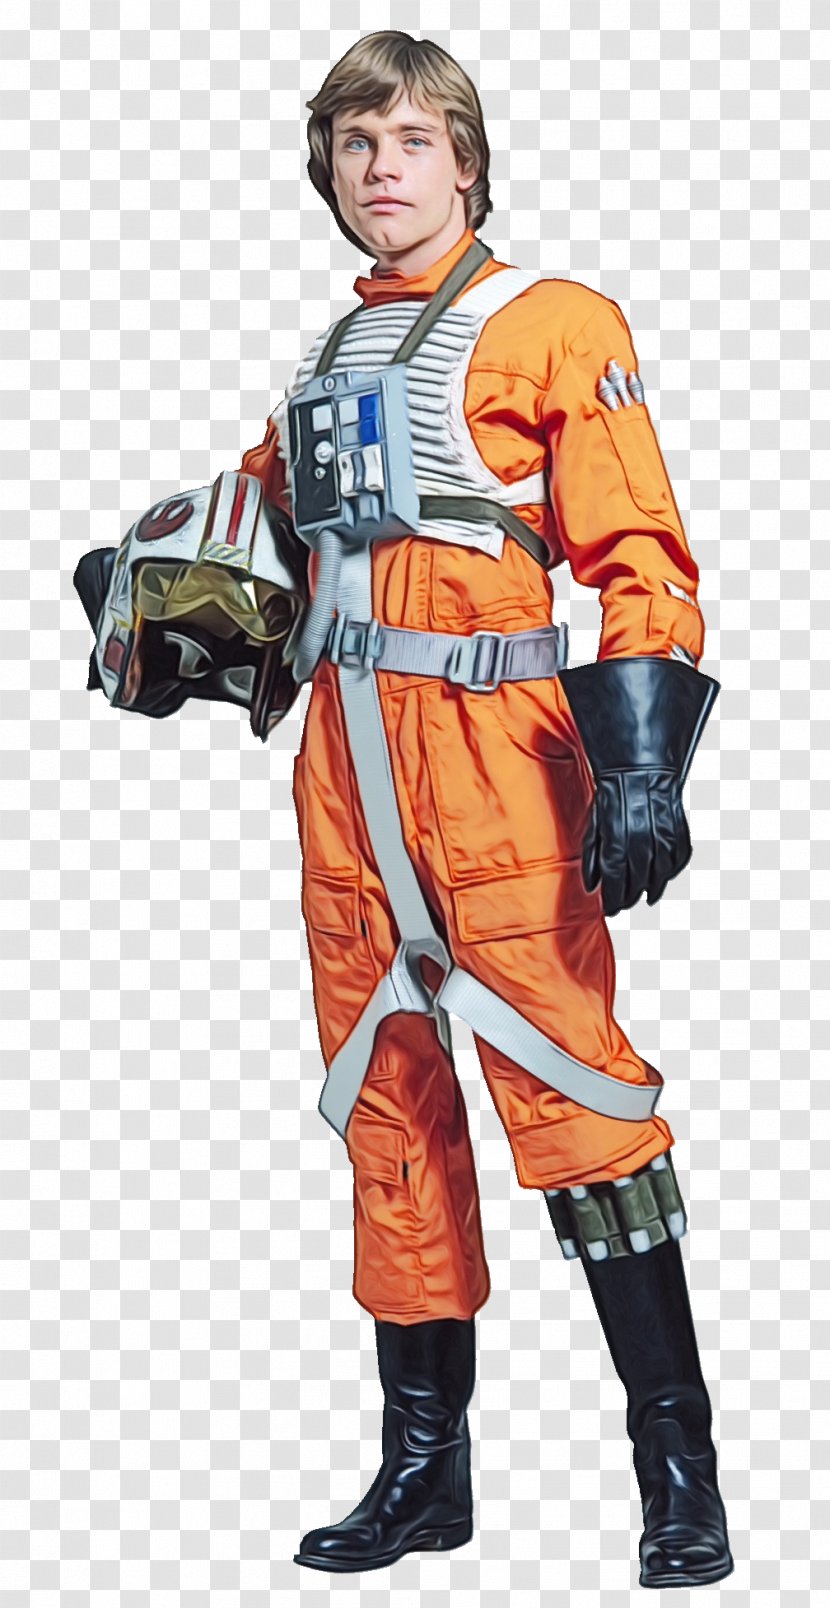 Star Wars Rebels Luke Skywalker Rebel Alliance X-wing Starfighter - Figurine Transparent PNG